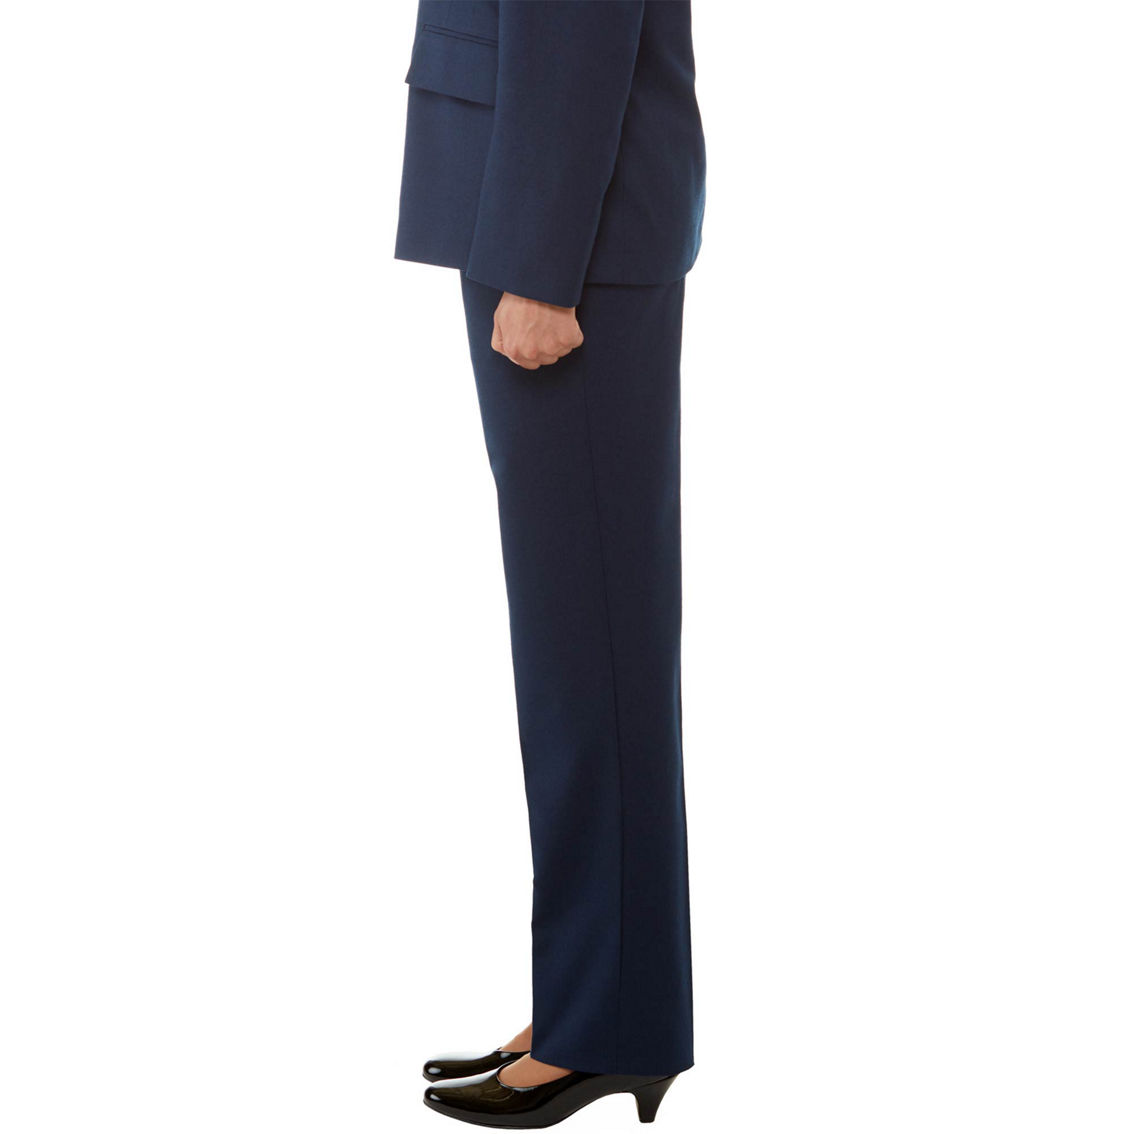 Air Force Service Dress Uniform Slacks Female - Image 4 of 4